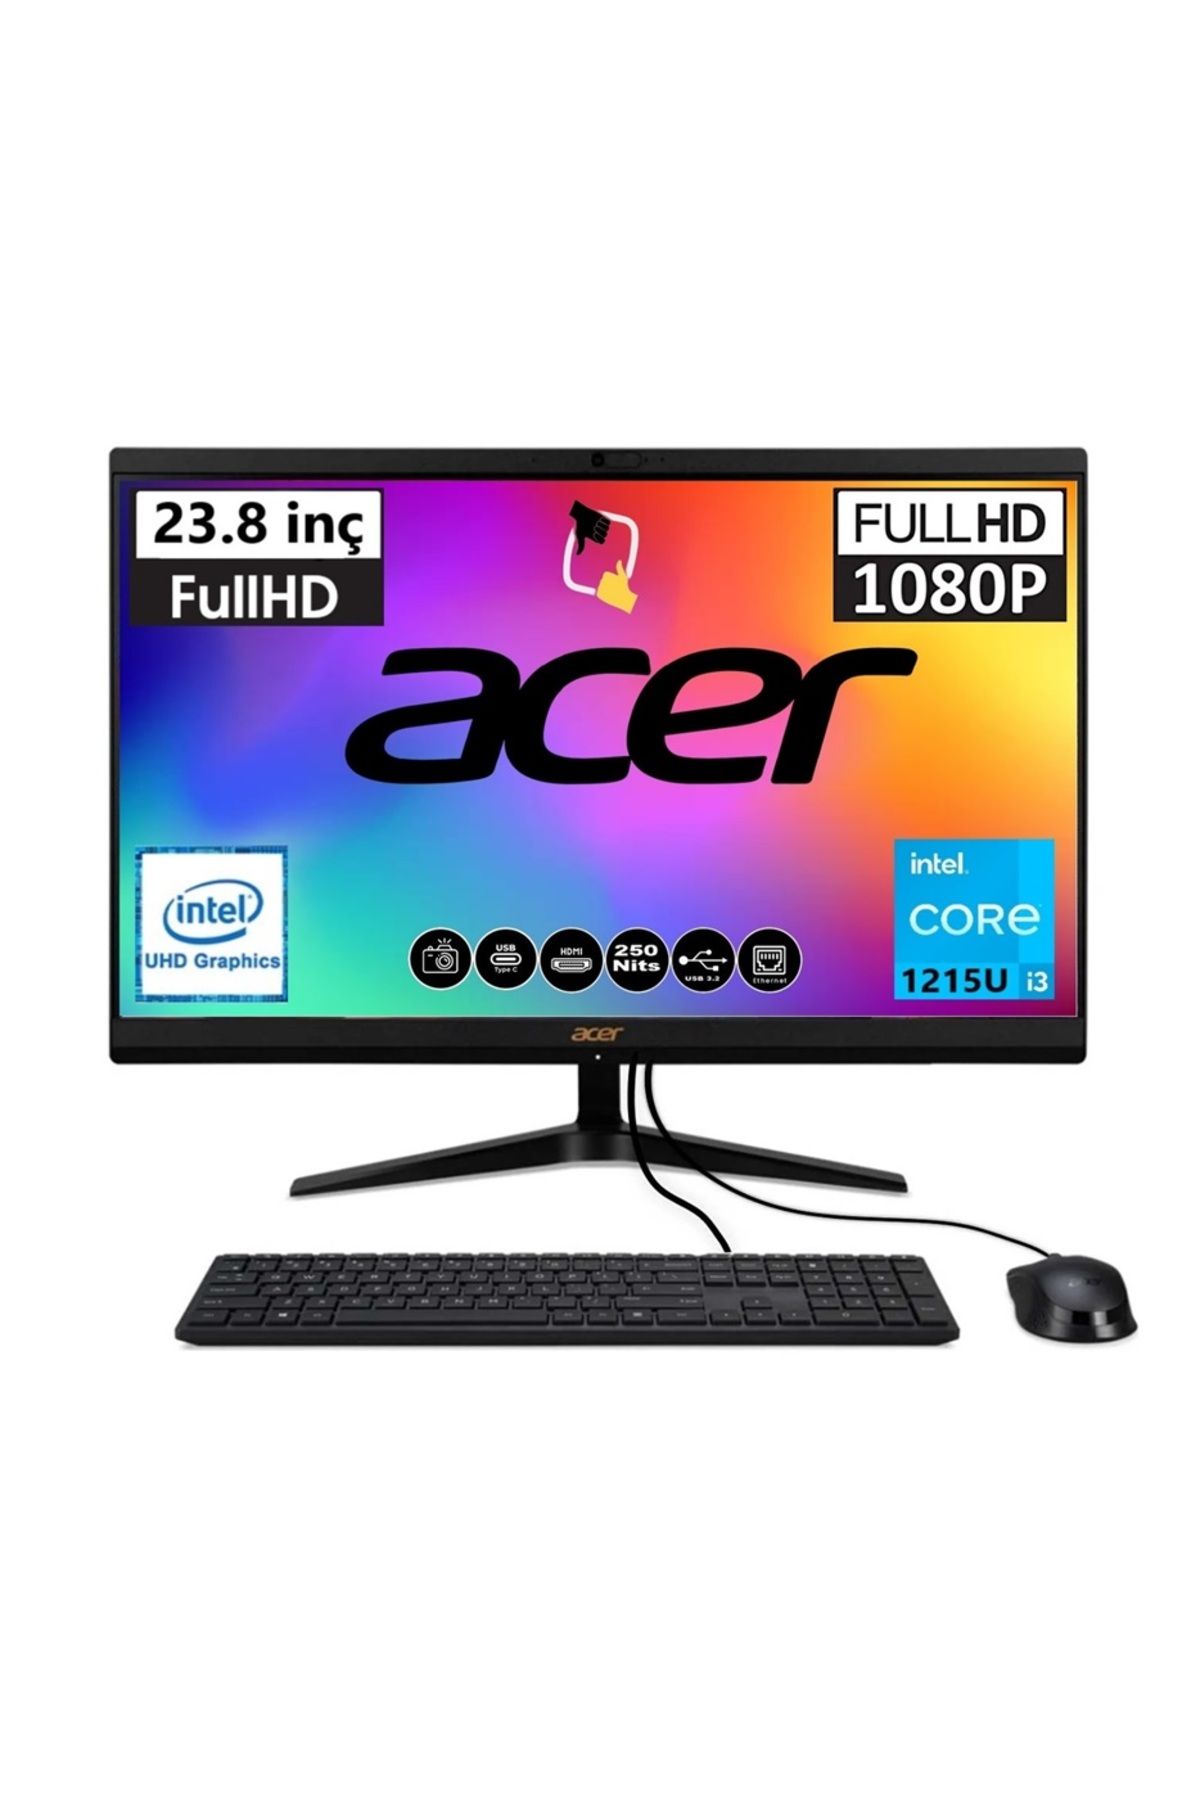 ACER Aspire C24-1700 Intel Core i3-1215U 16GB 512GB SSD 23.8" FHD Frds All In One Pc Snertech